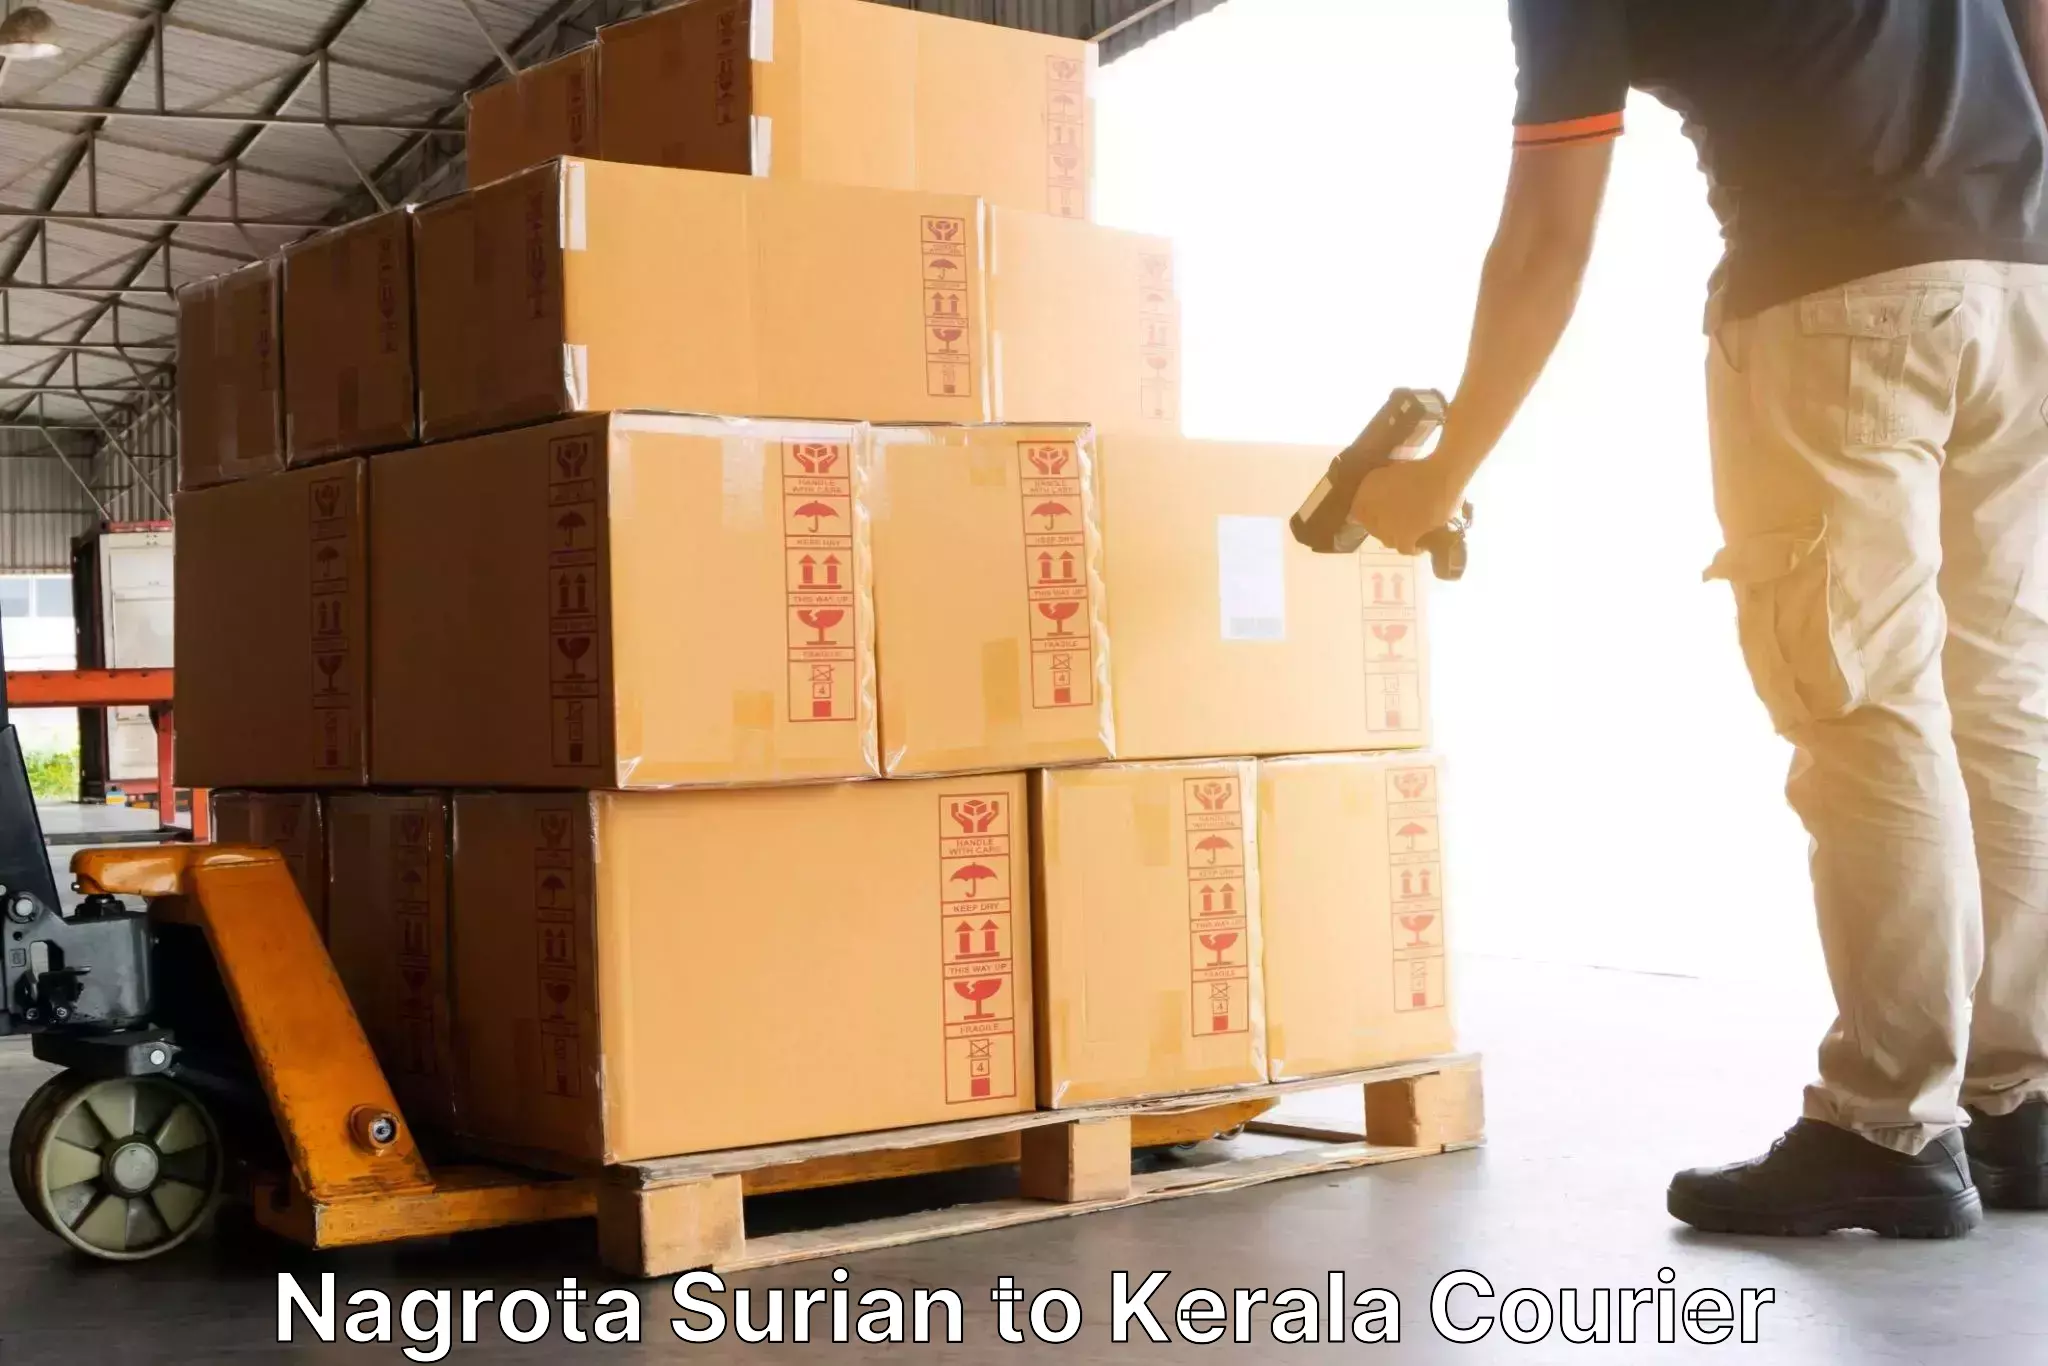 Express delivery network Nagrota Surian to Cochin Port Kochi